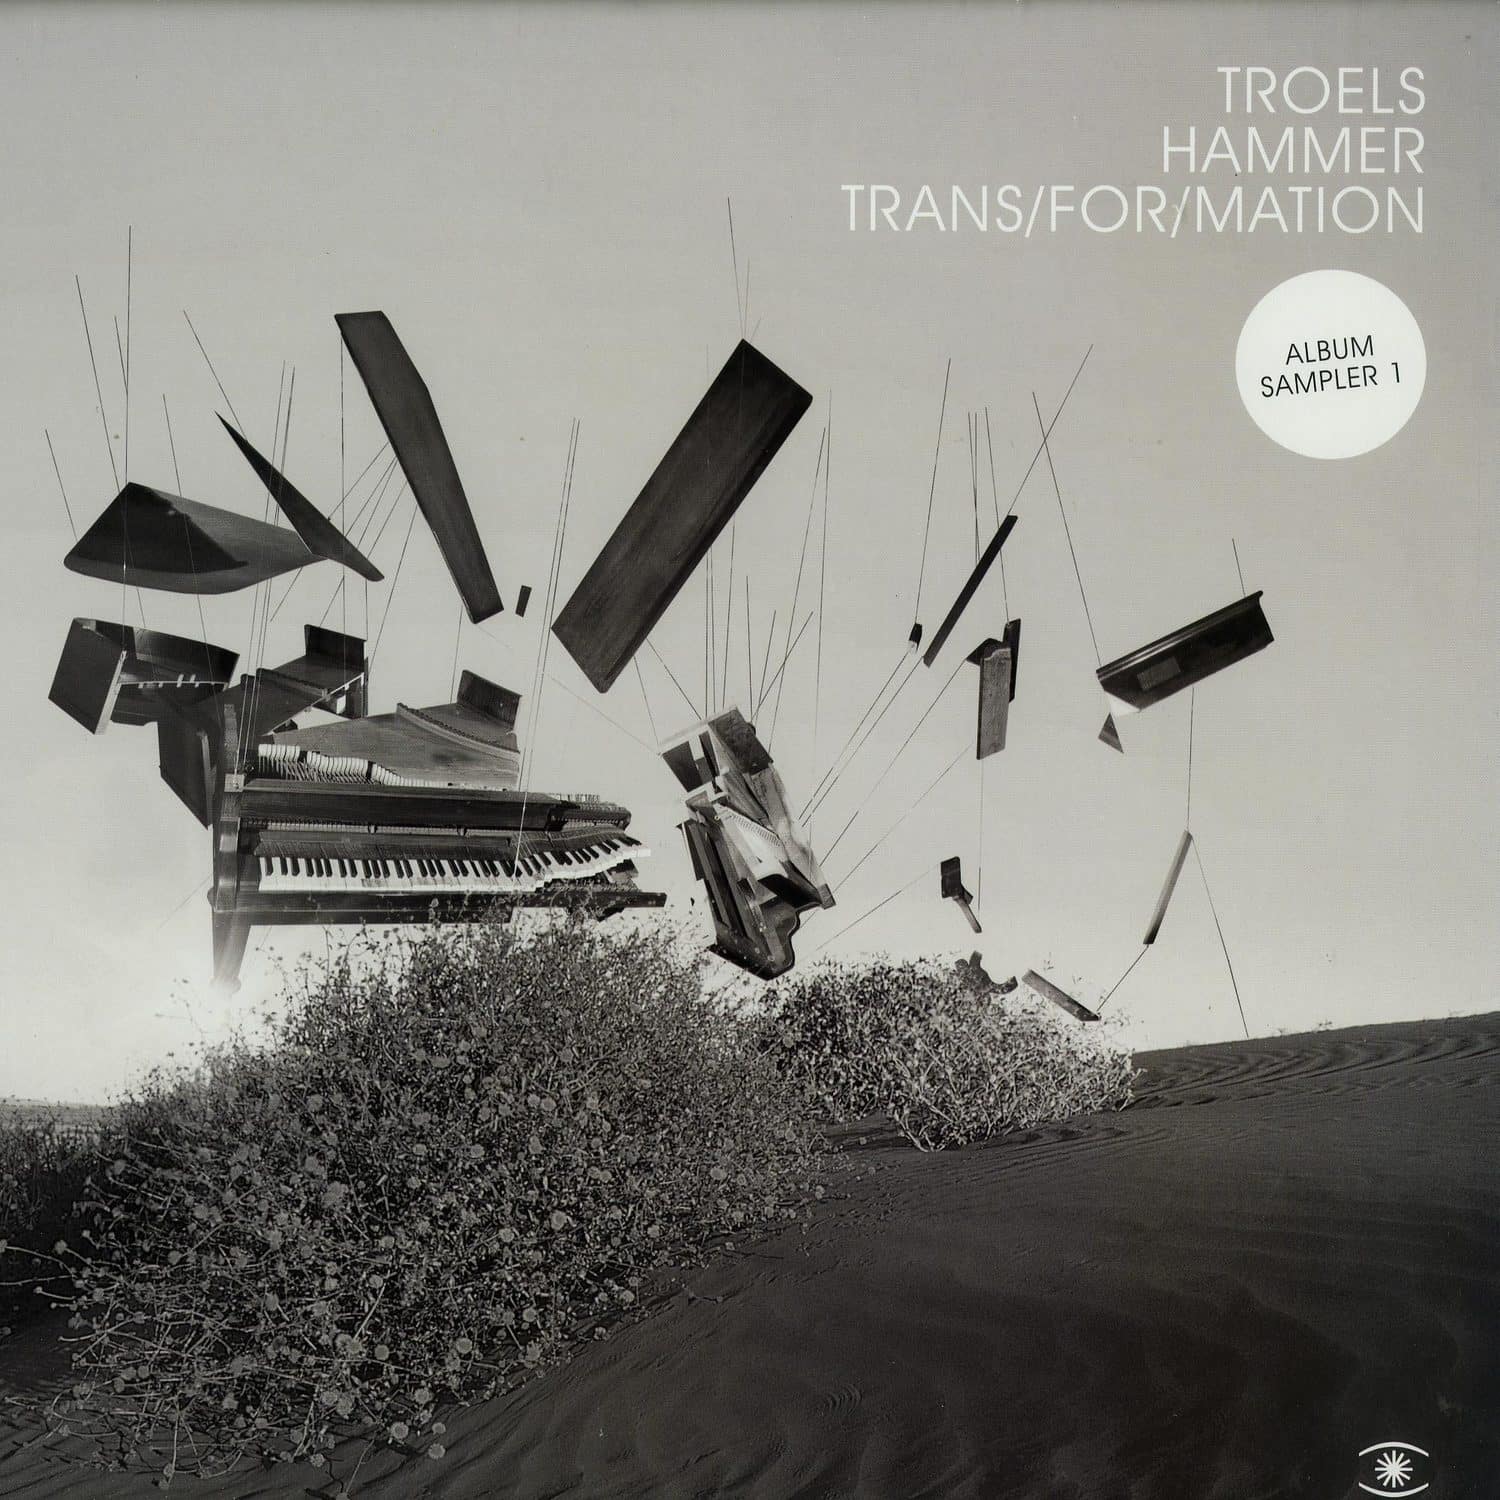 Troels Hammer - TRANS/FOR/MATION - ALBUM SAMPLER 1